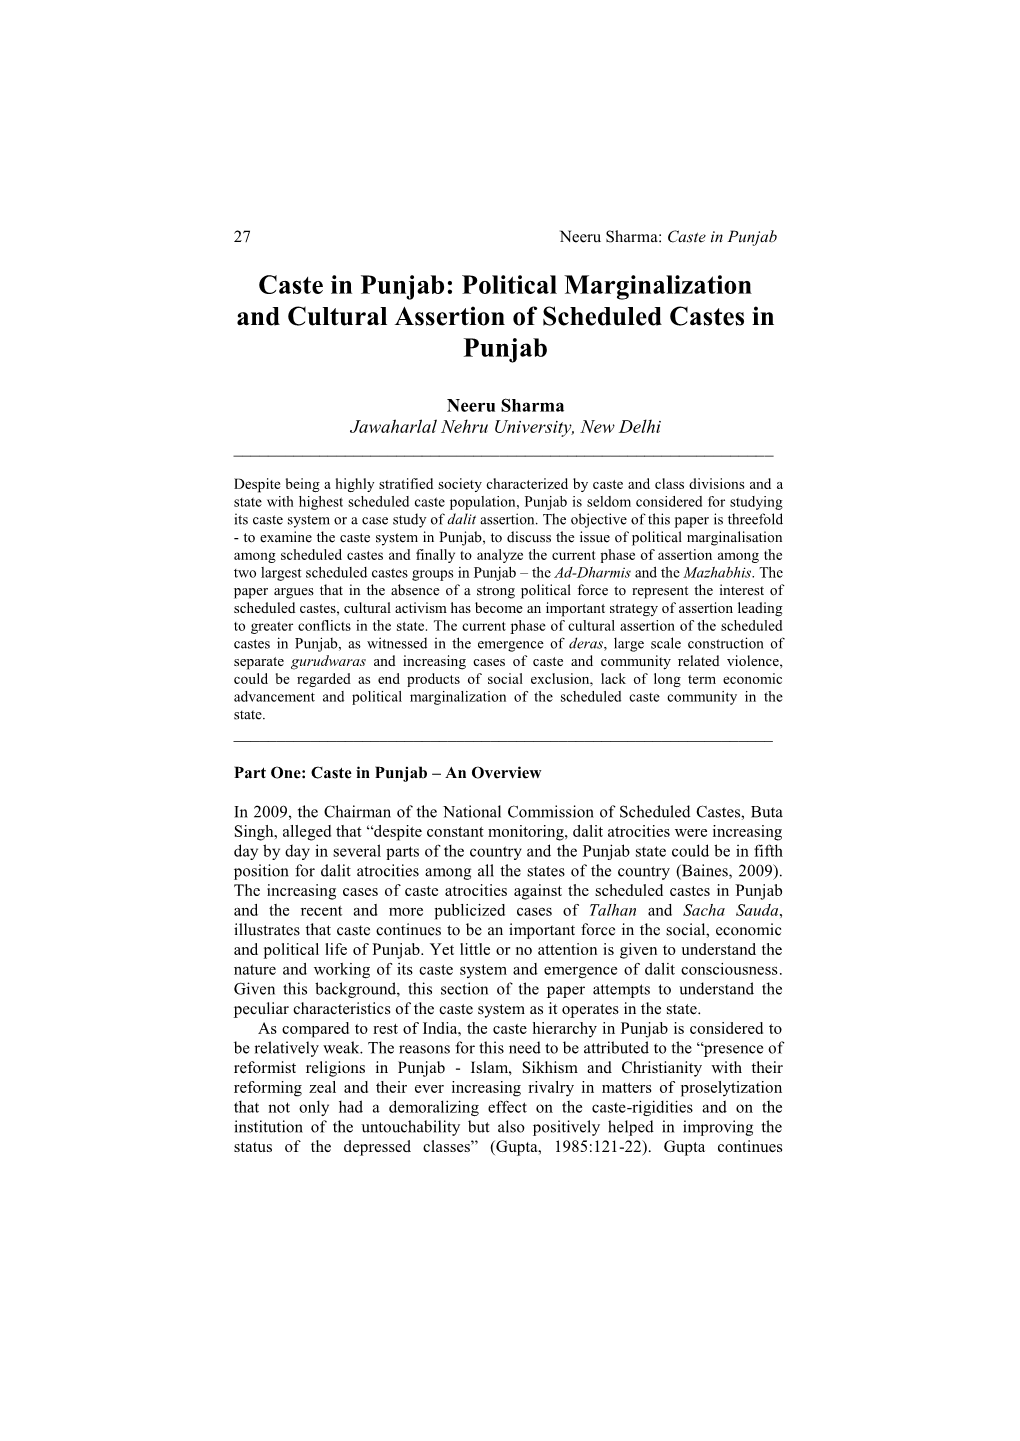 Caste in Punjab: Political Marginalization and Cultural Assertion of Scheduled Castes in Punjab